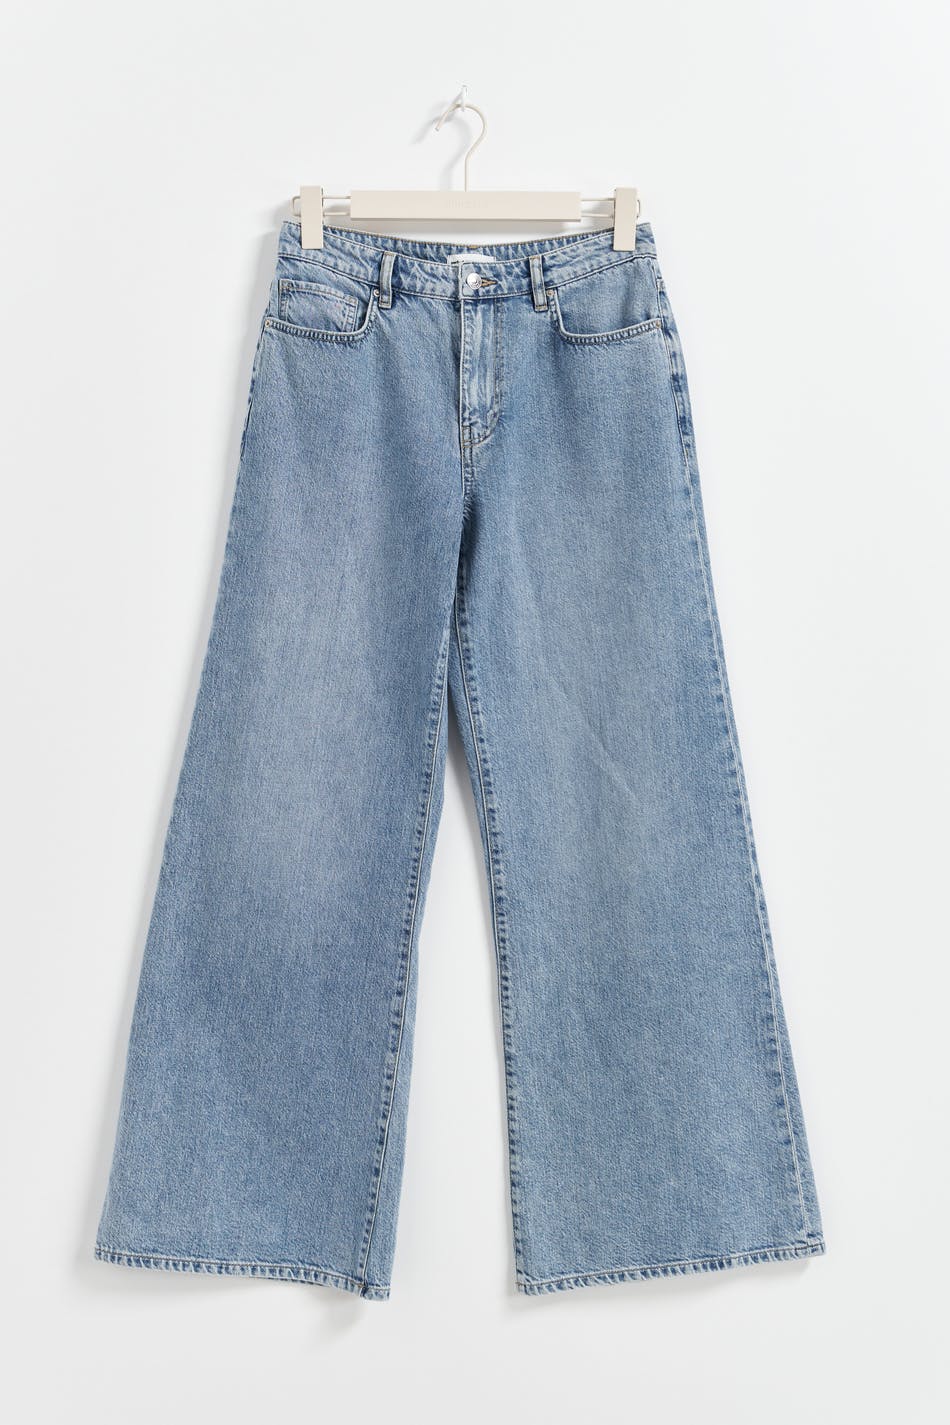 Gina Tricot - Super wide petite jeans - wide jeans - Blue - 34 - Female